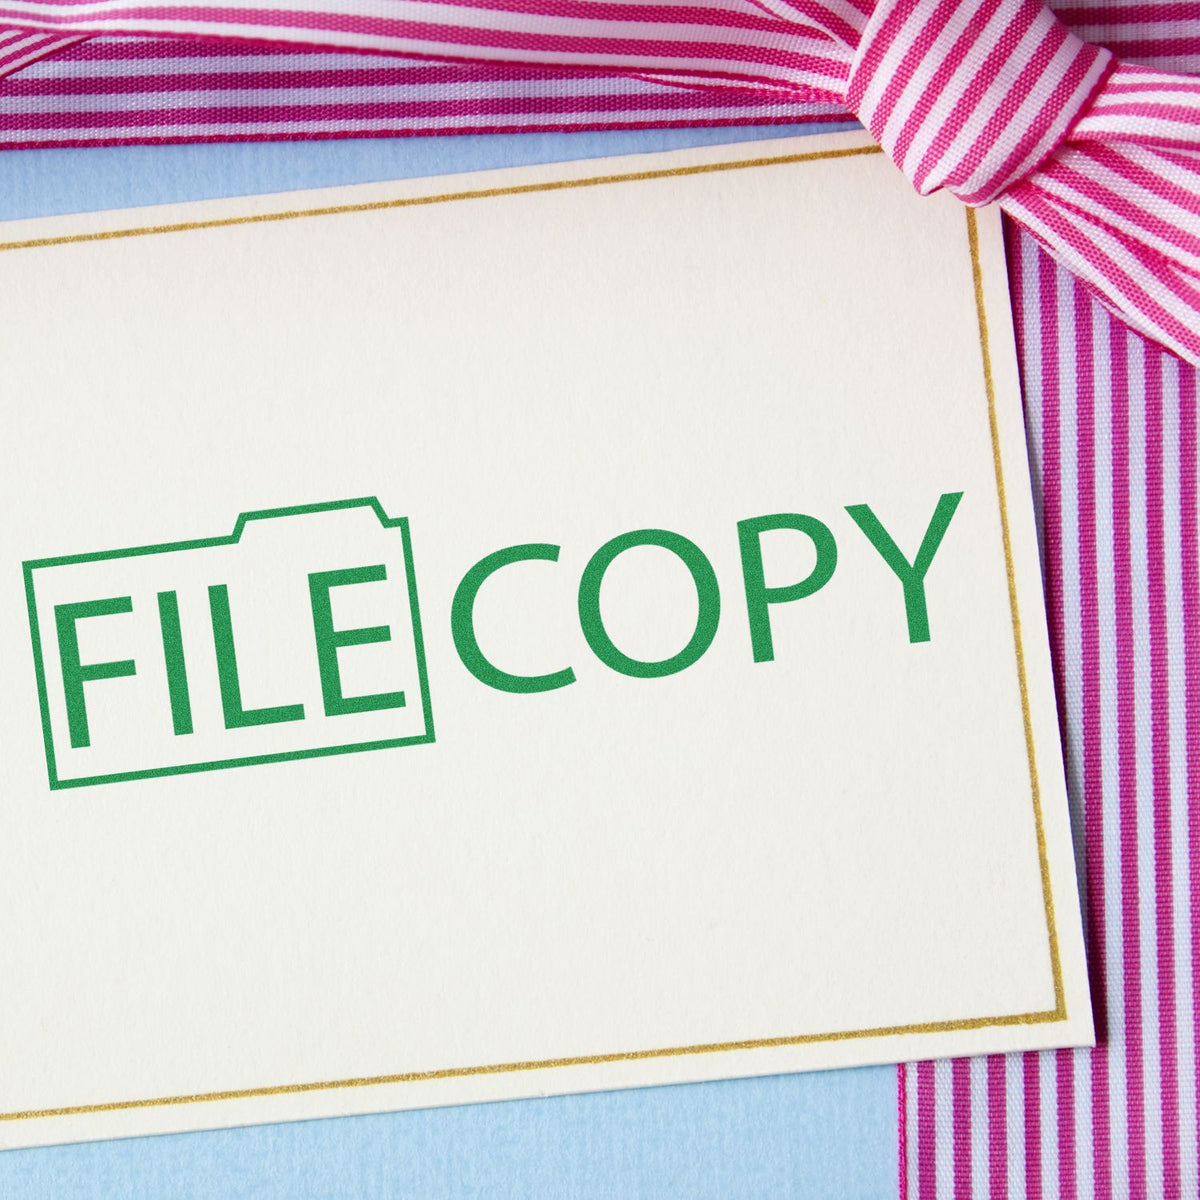 Slim Pre-Inked File Copy with Folder Stamp In Use